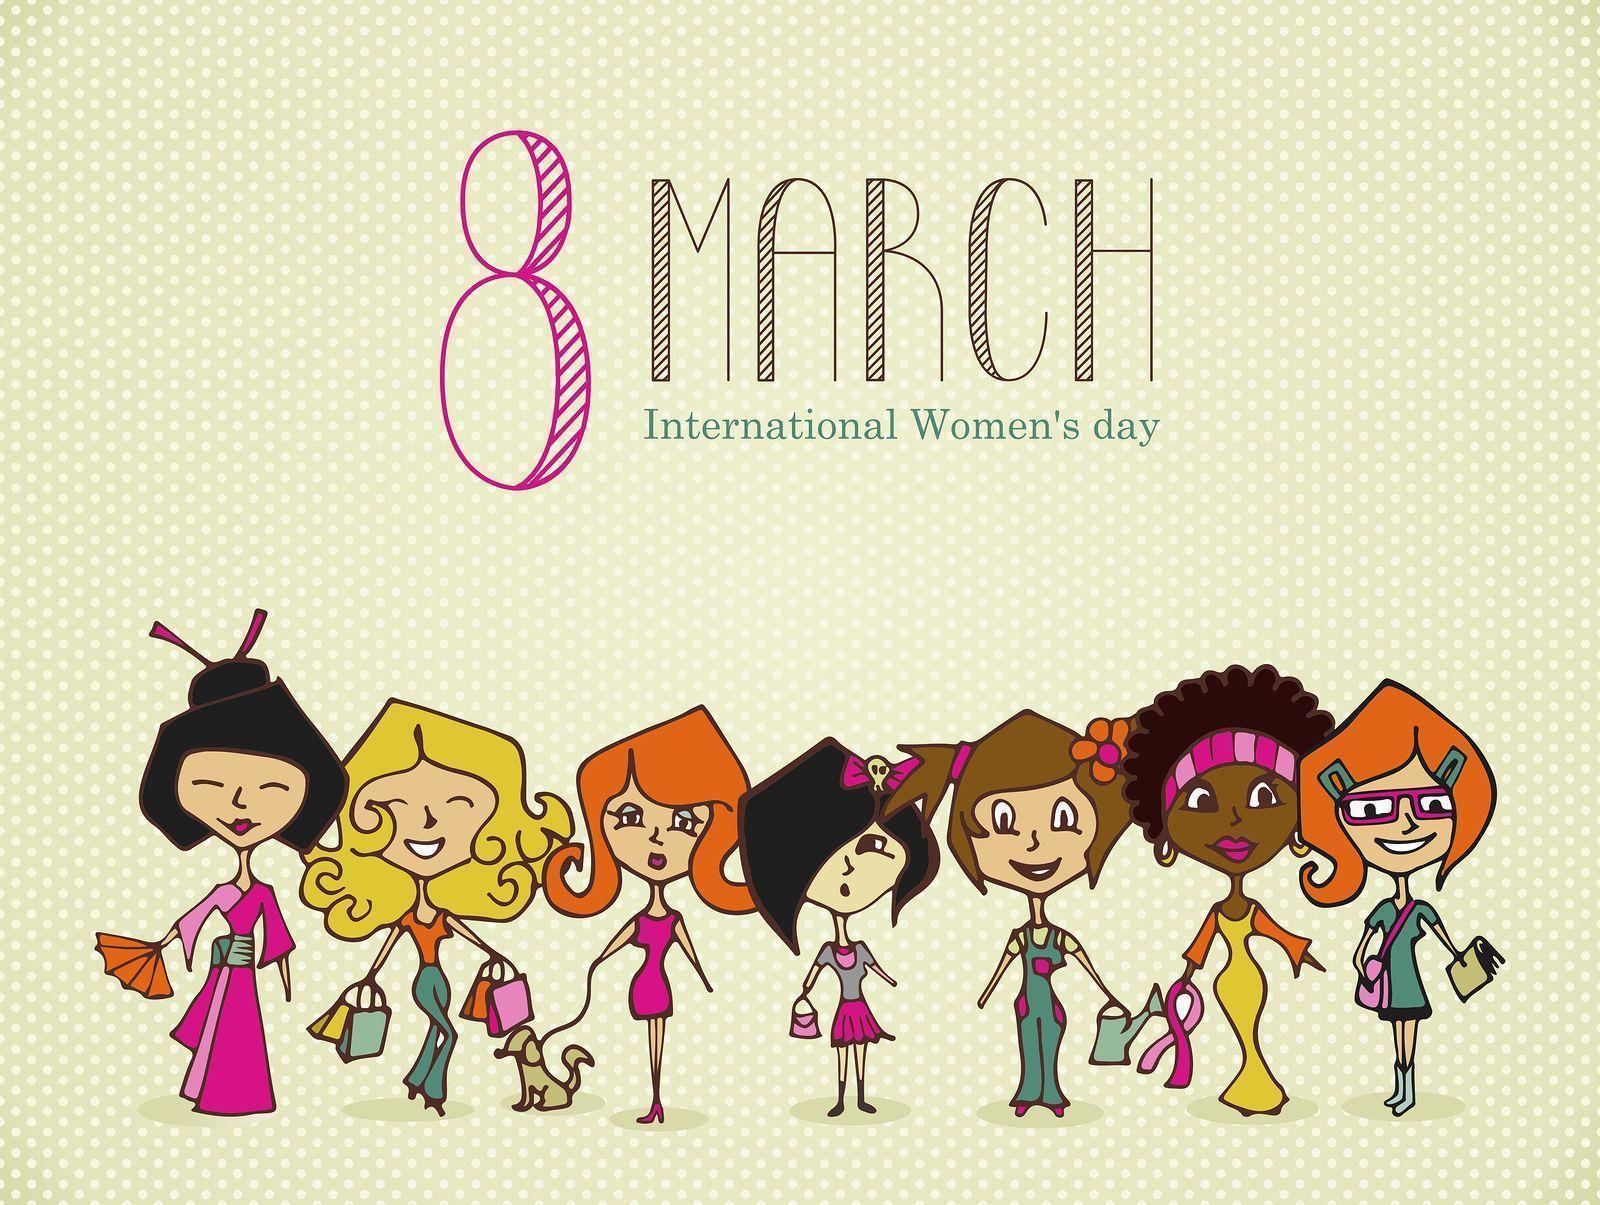 International Women&;s Day Image [Free]